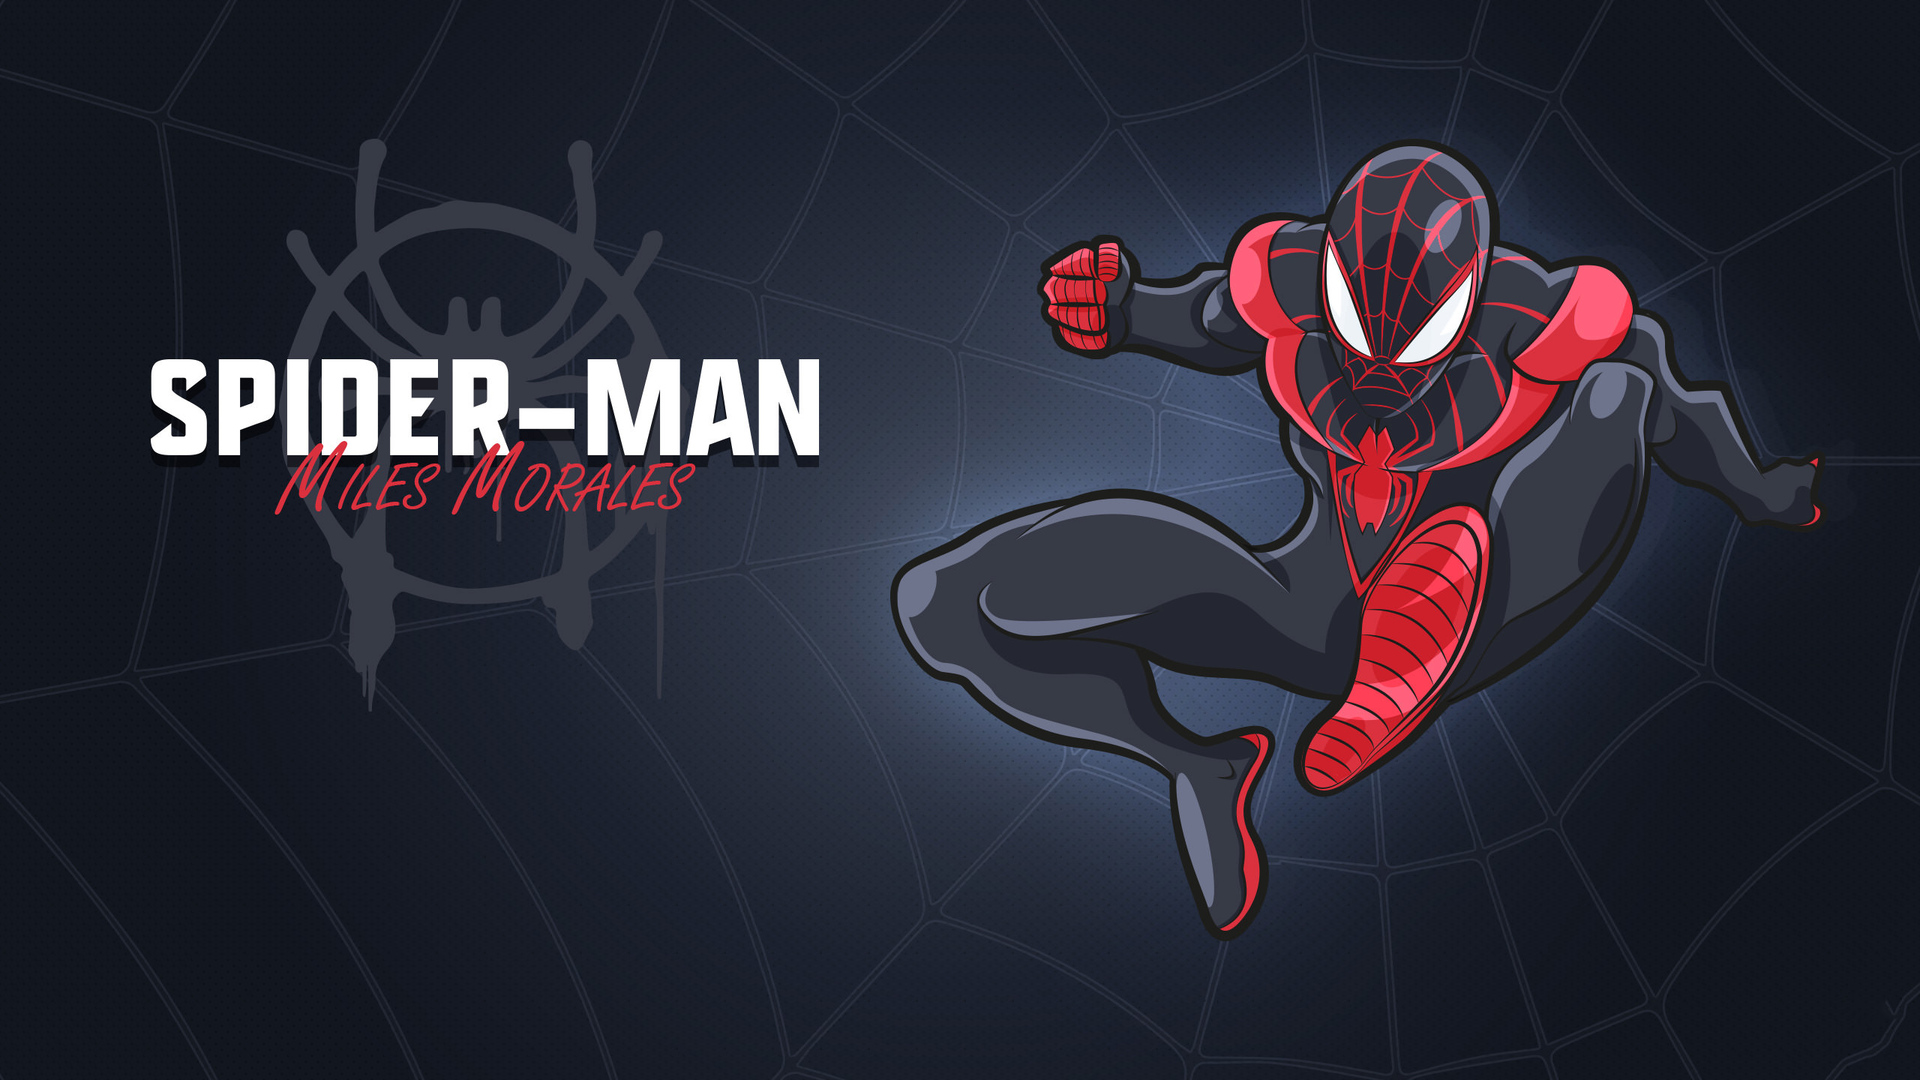 miles-morales-spider-man-art-yr.jpg. 